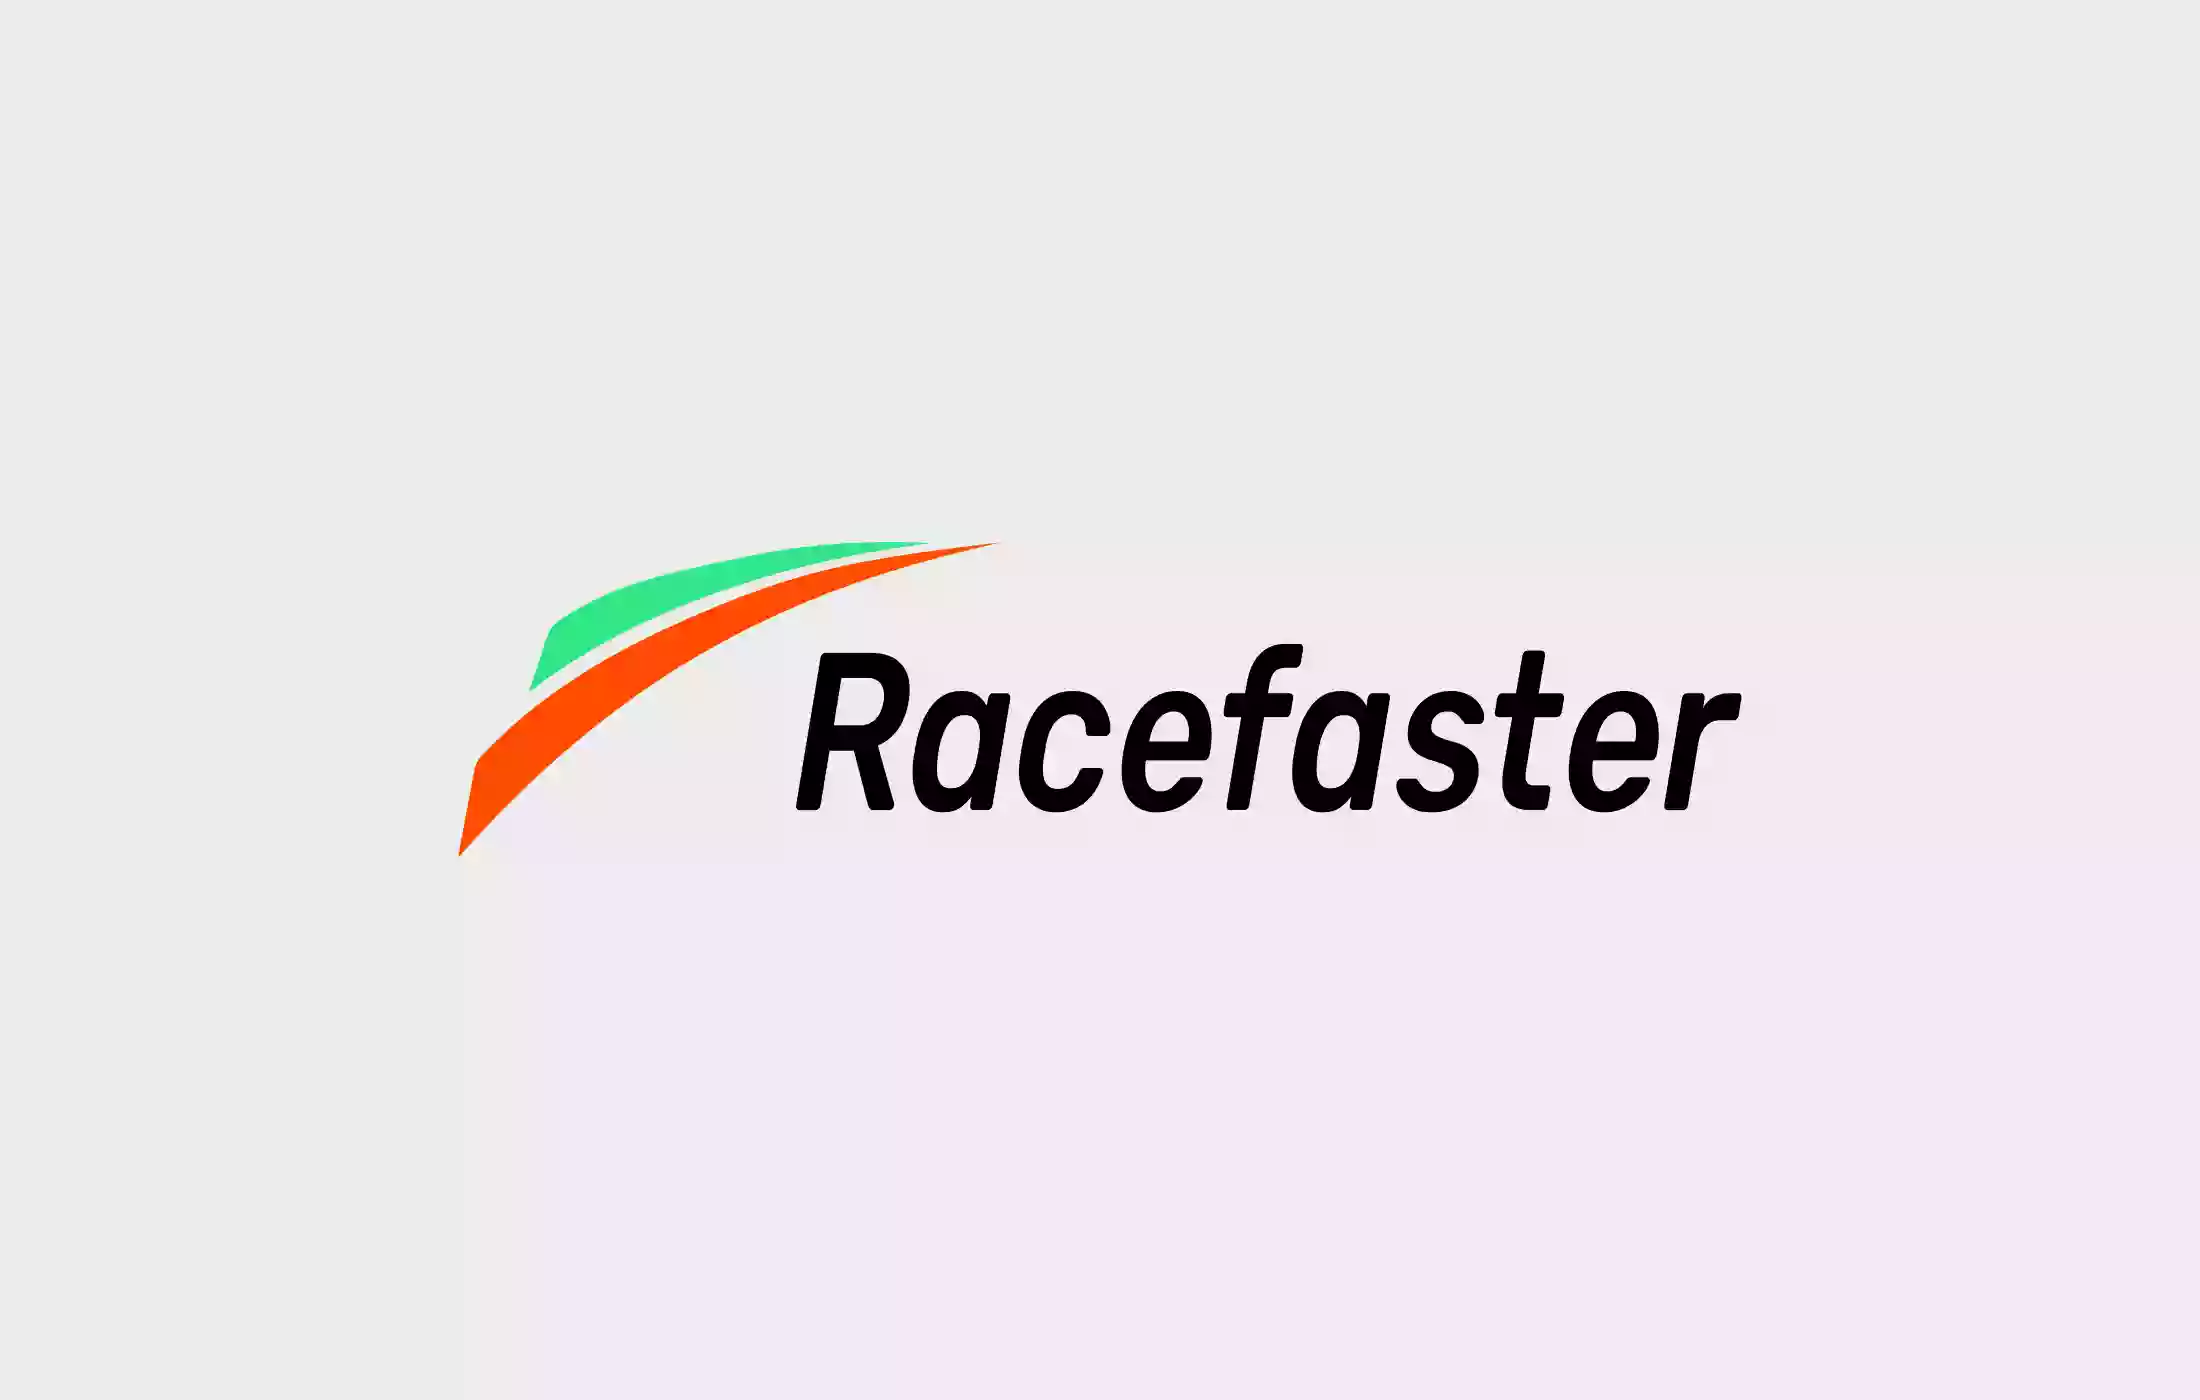 Racefaster